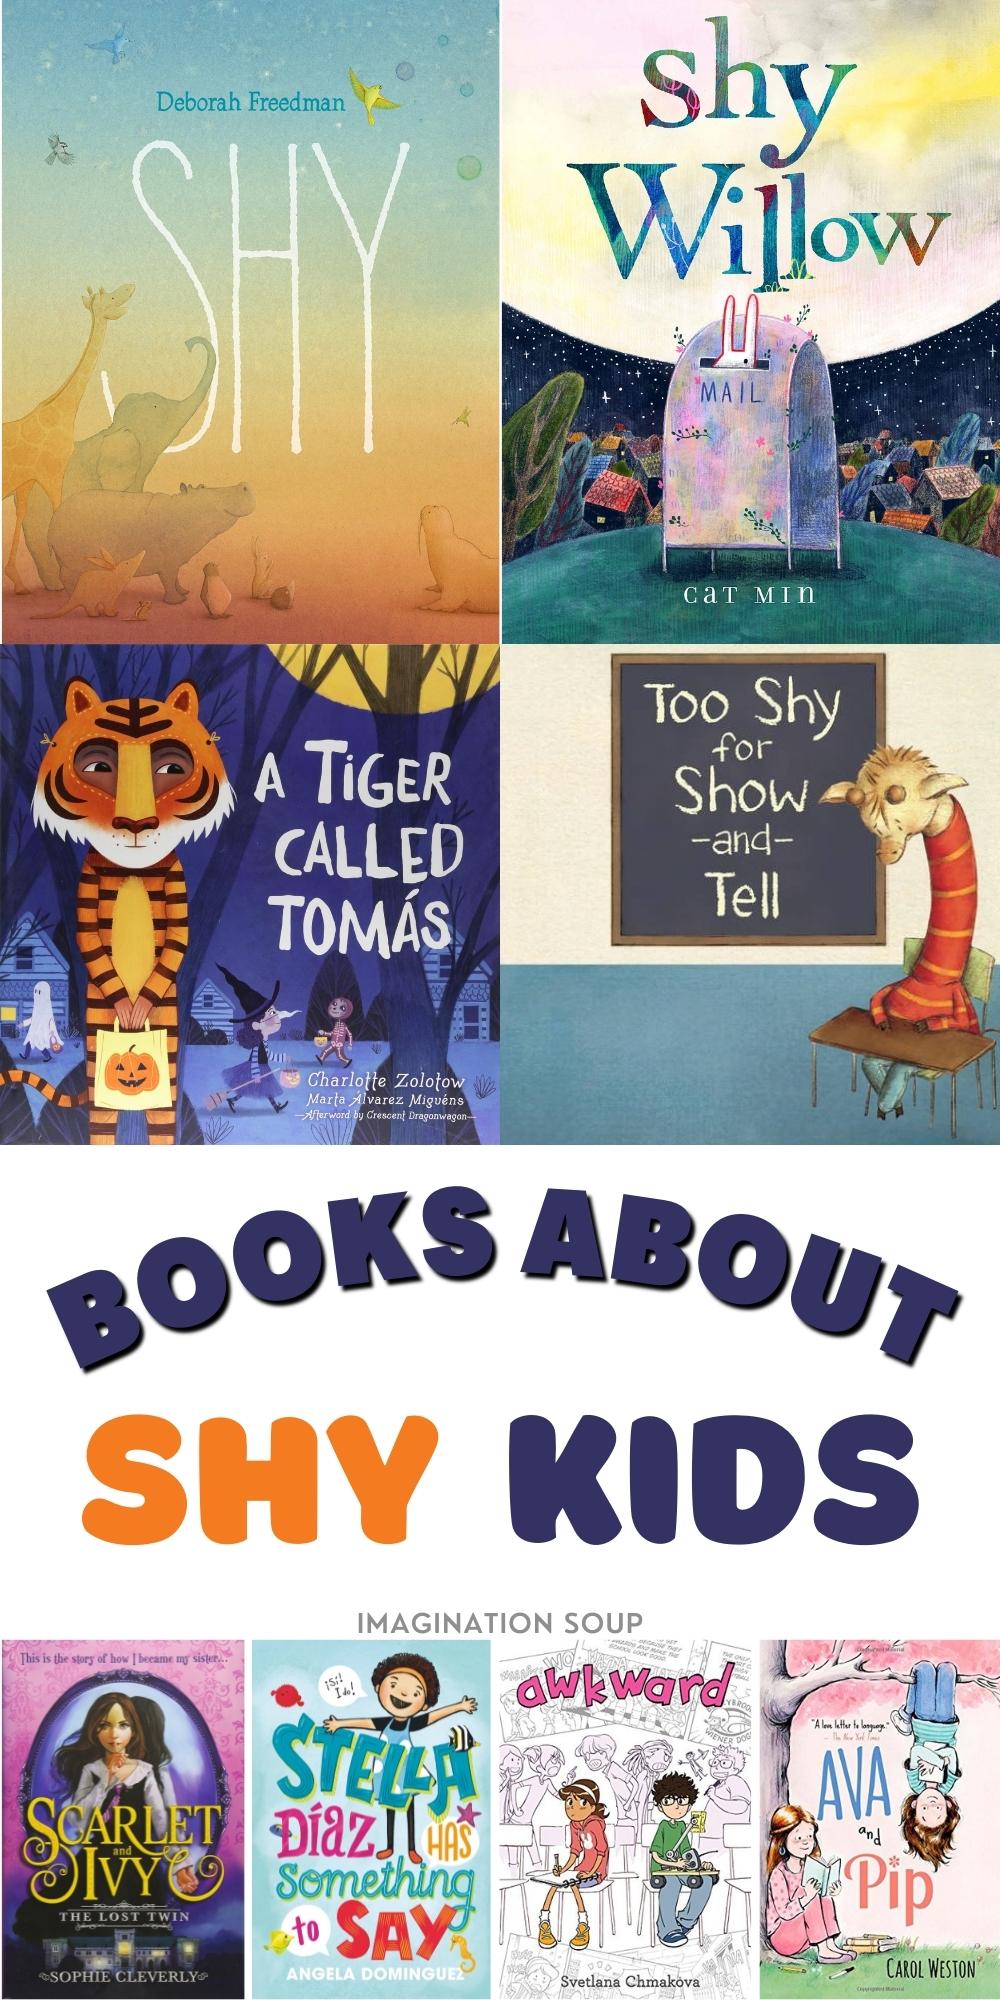 Books About Shy Kids